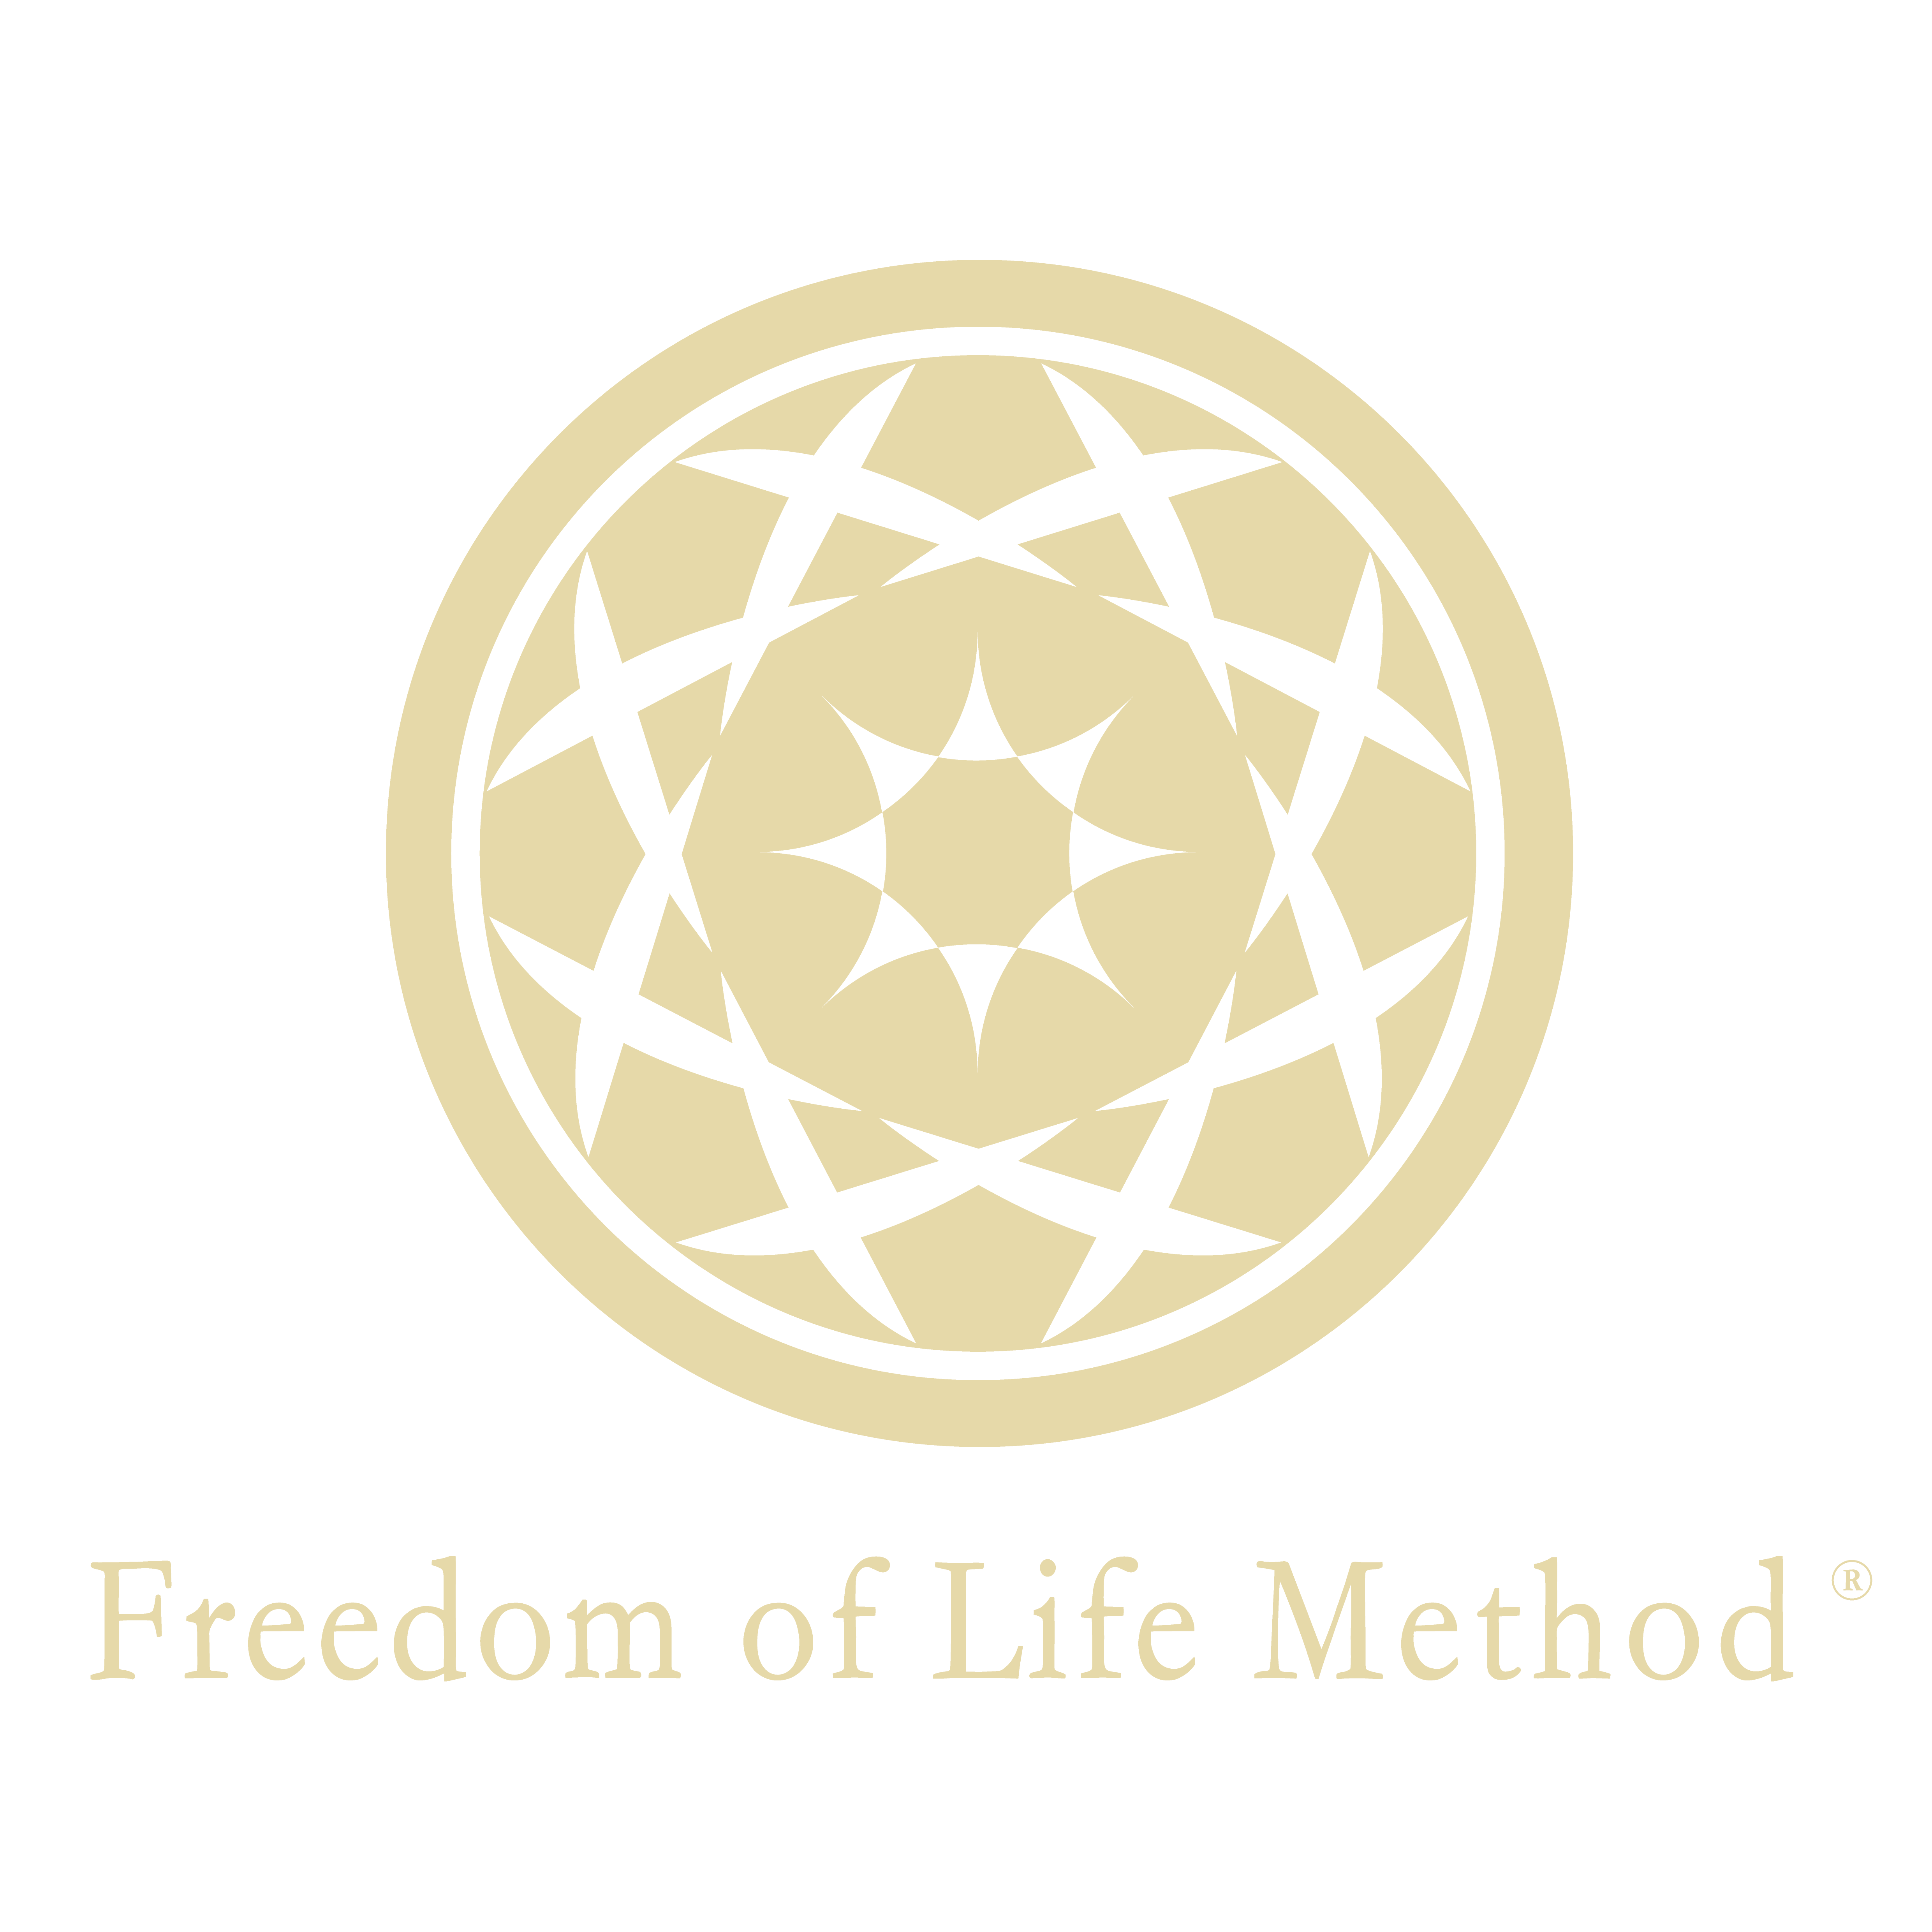 Freedom of Life Method® 眞空流古武術®